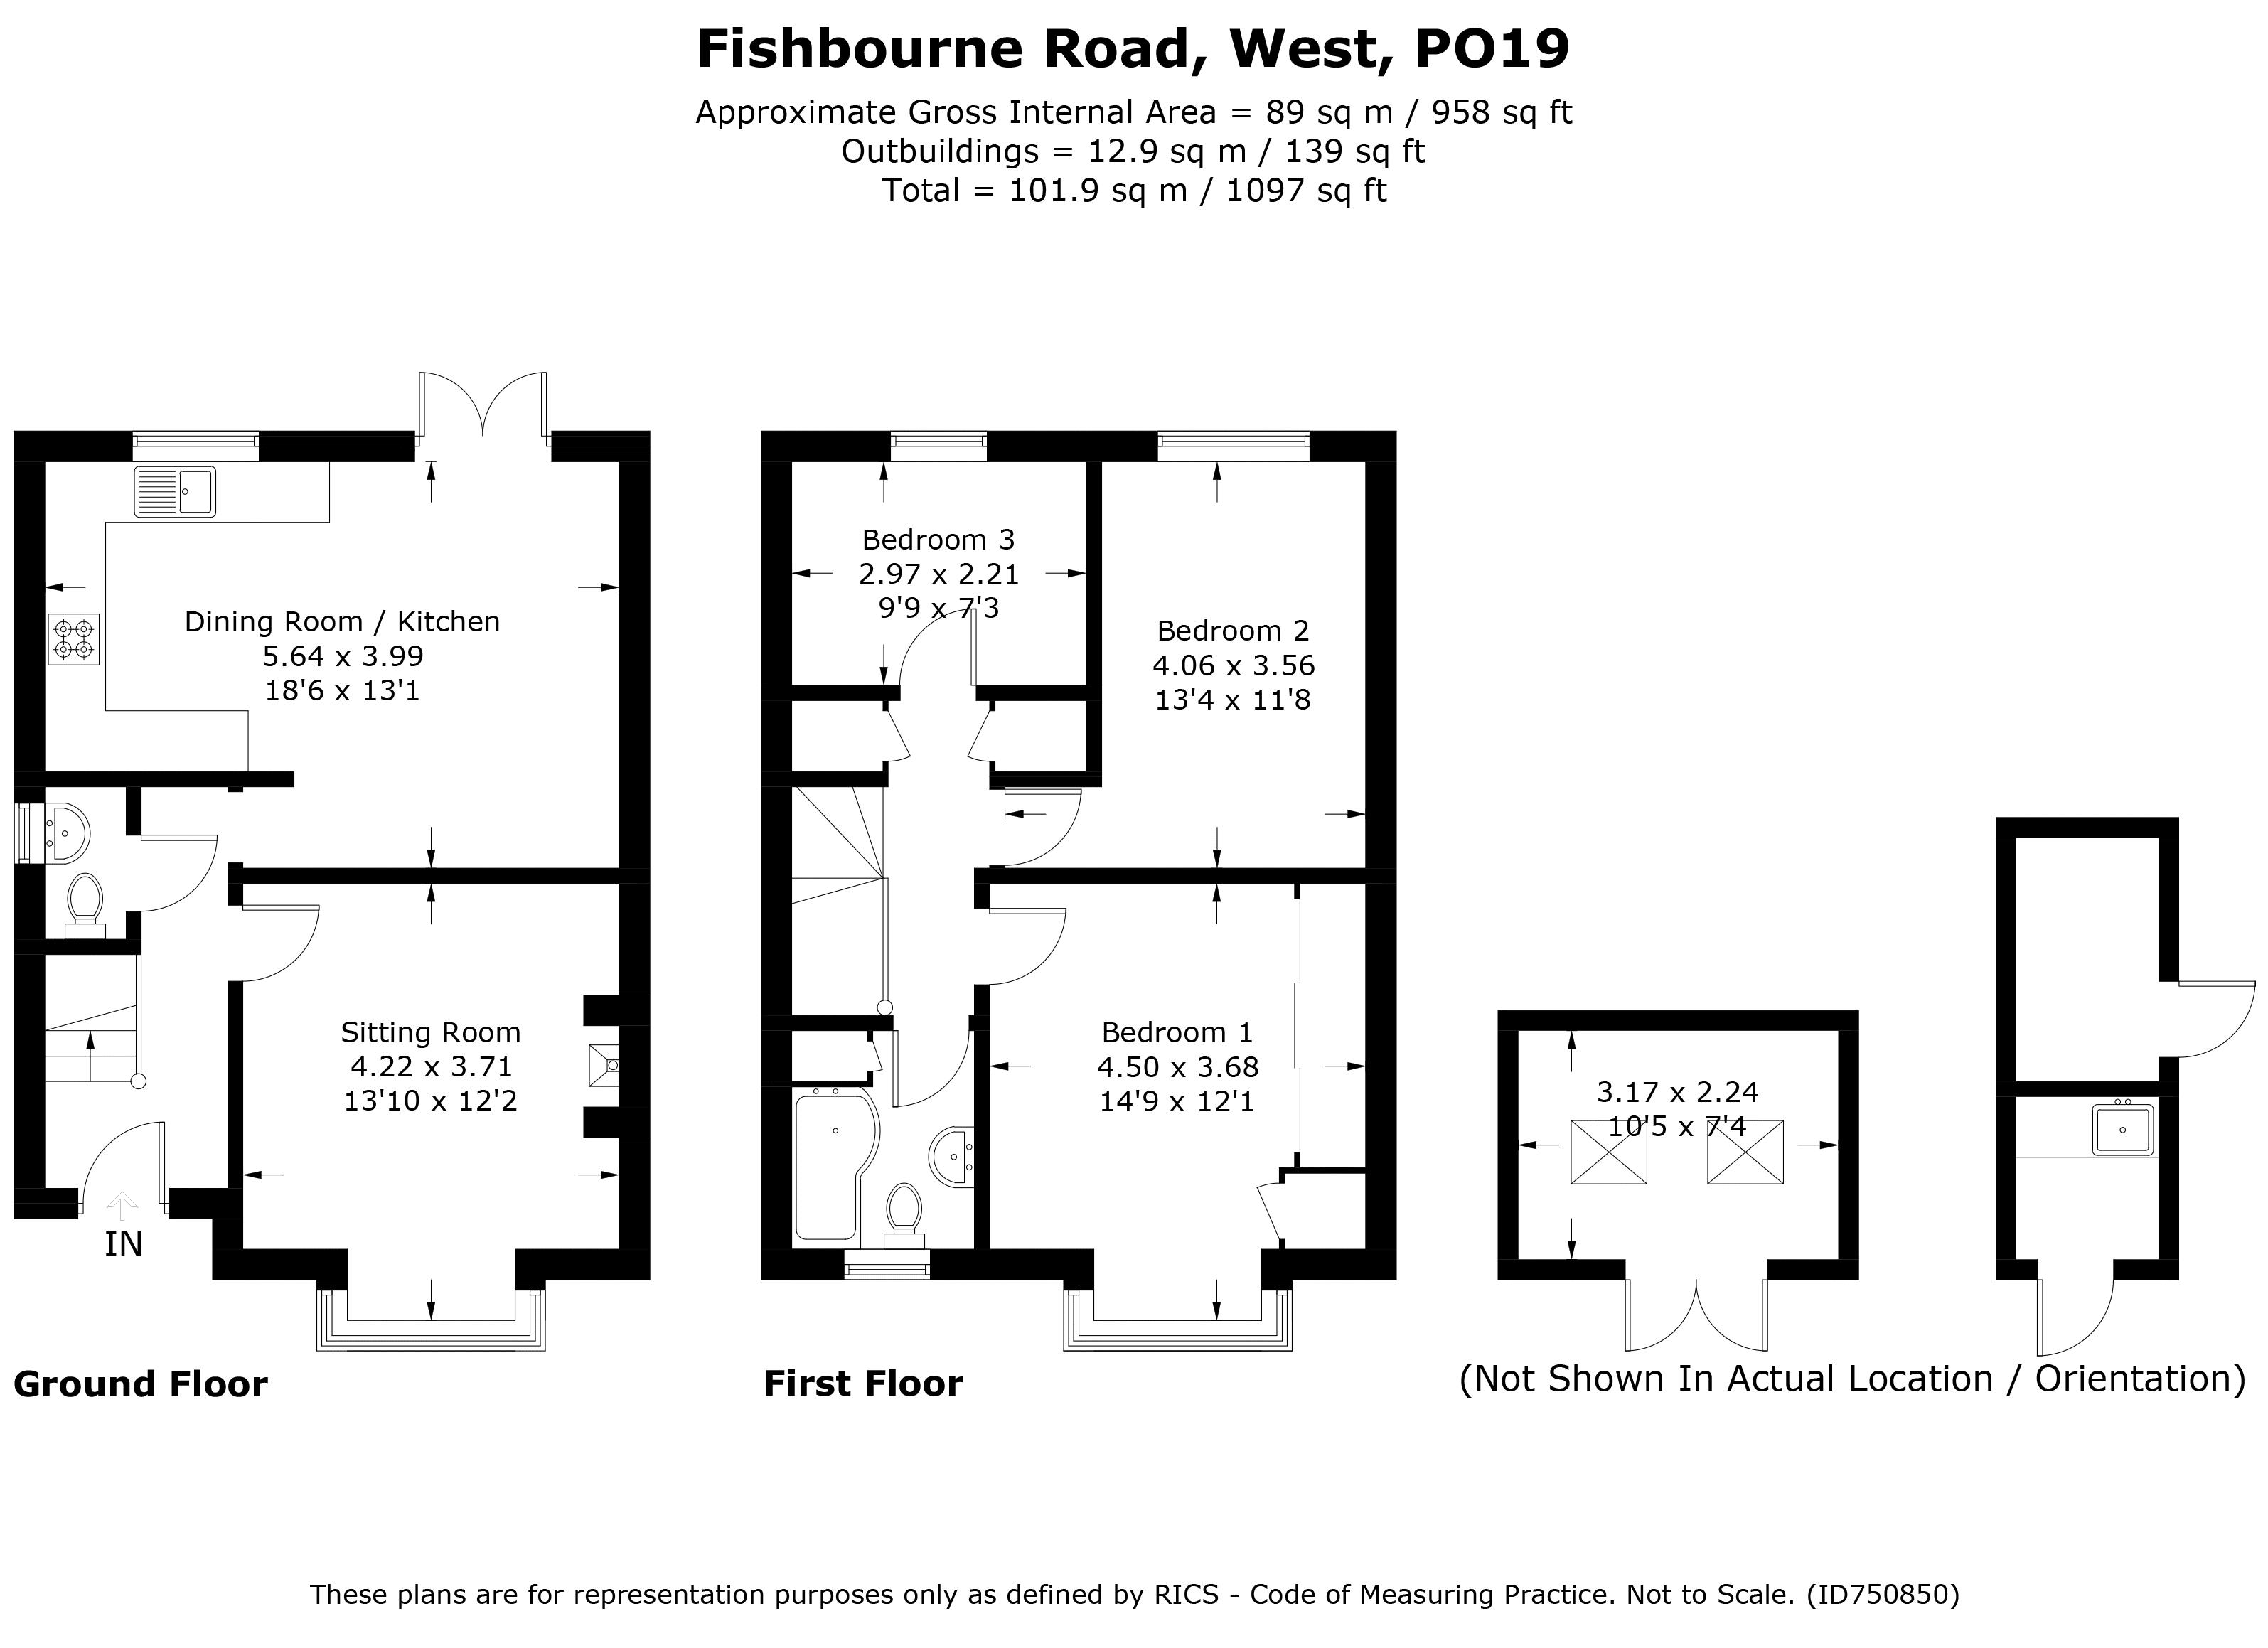 Fishbourne Road West